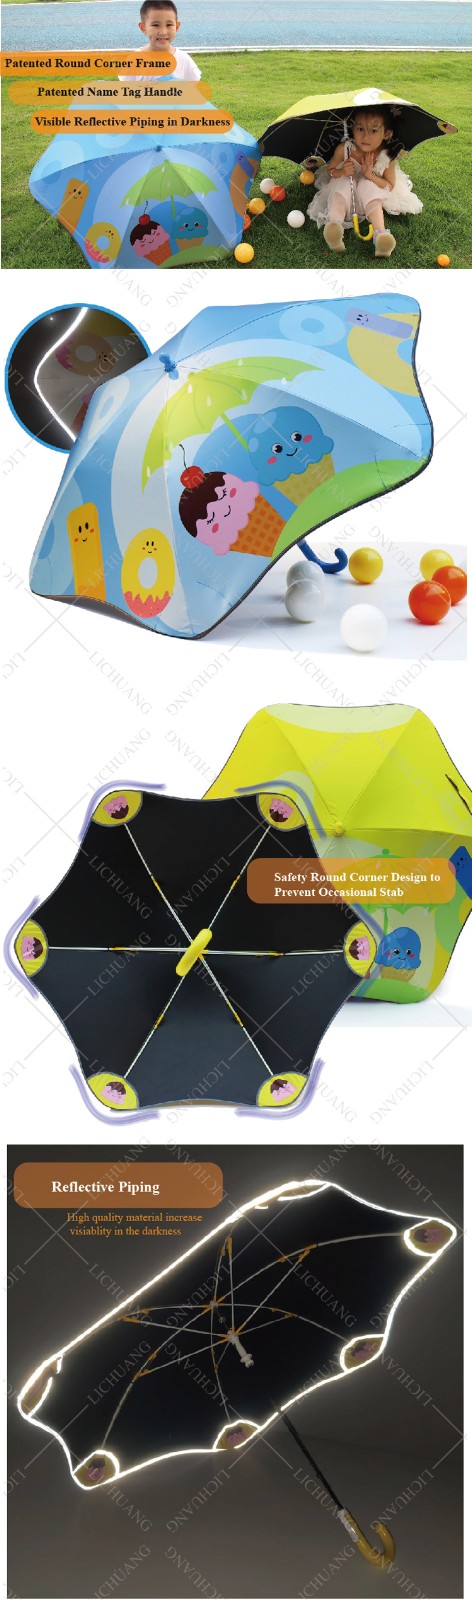 umbrella for kids